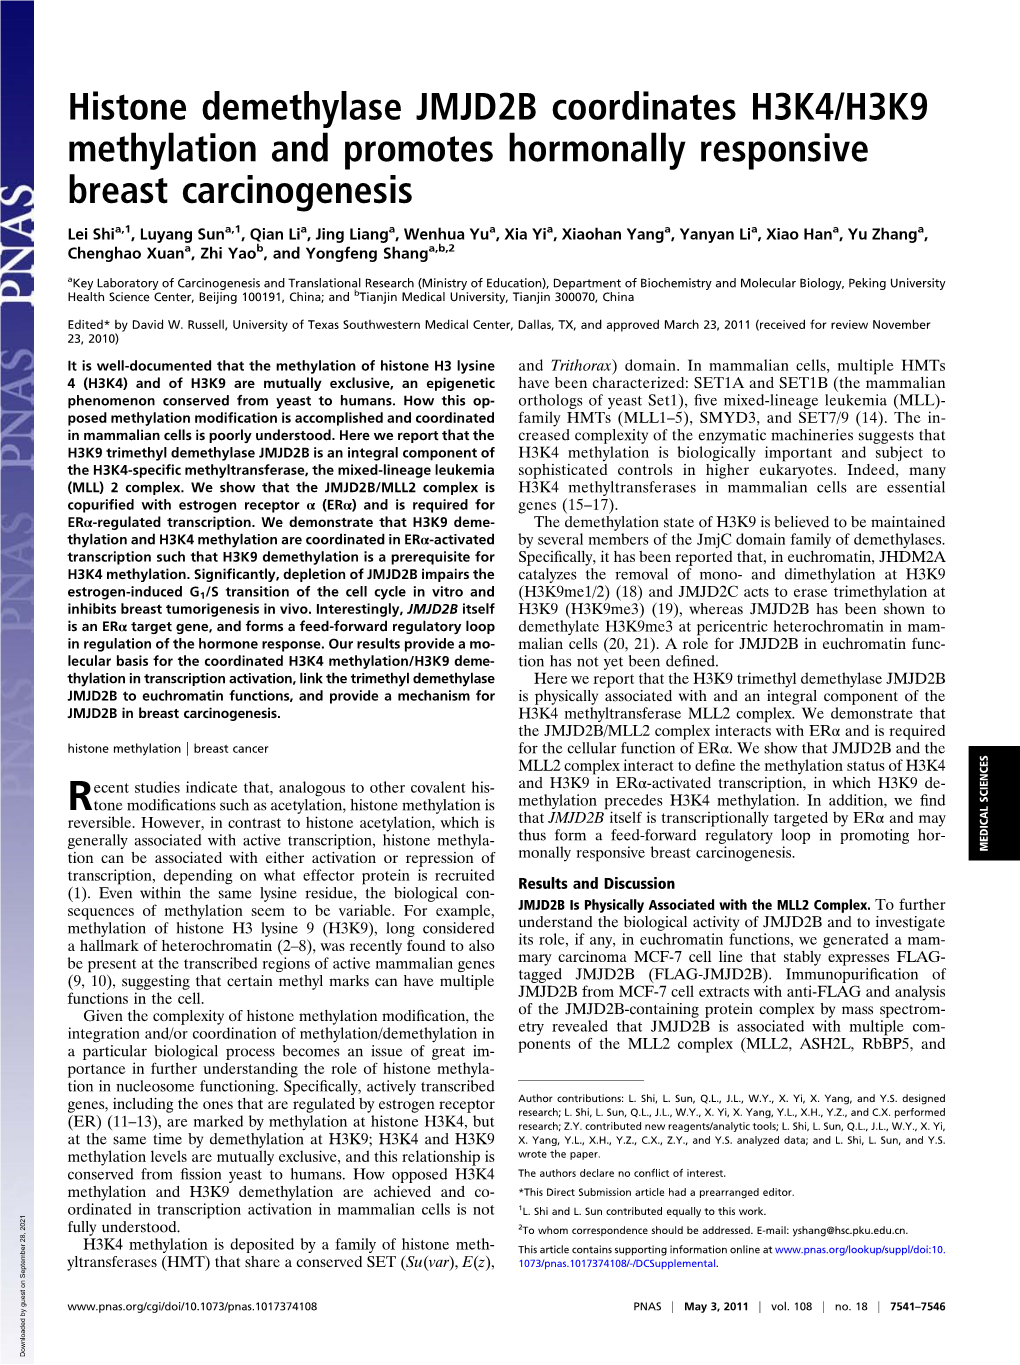 Histone Demethylase JMJD2B Coordinates H3K4/H3K9 Methylation and Promotes Hormonally Responsive Breast Carcinogenesis